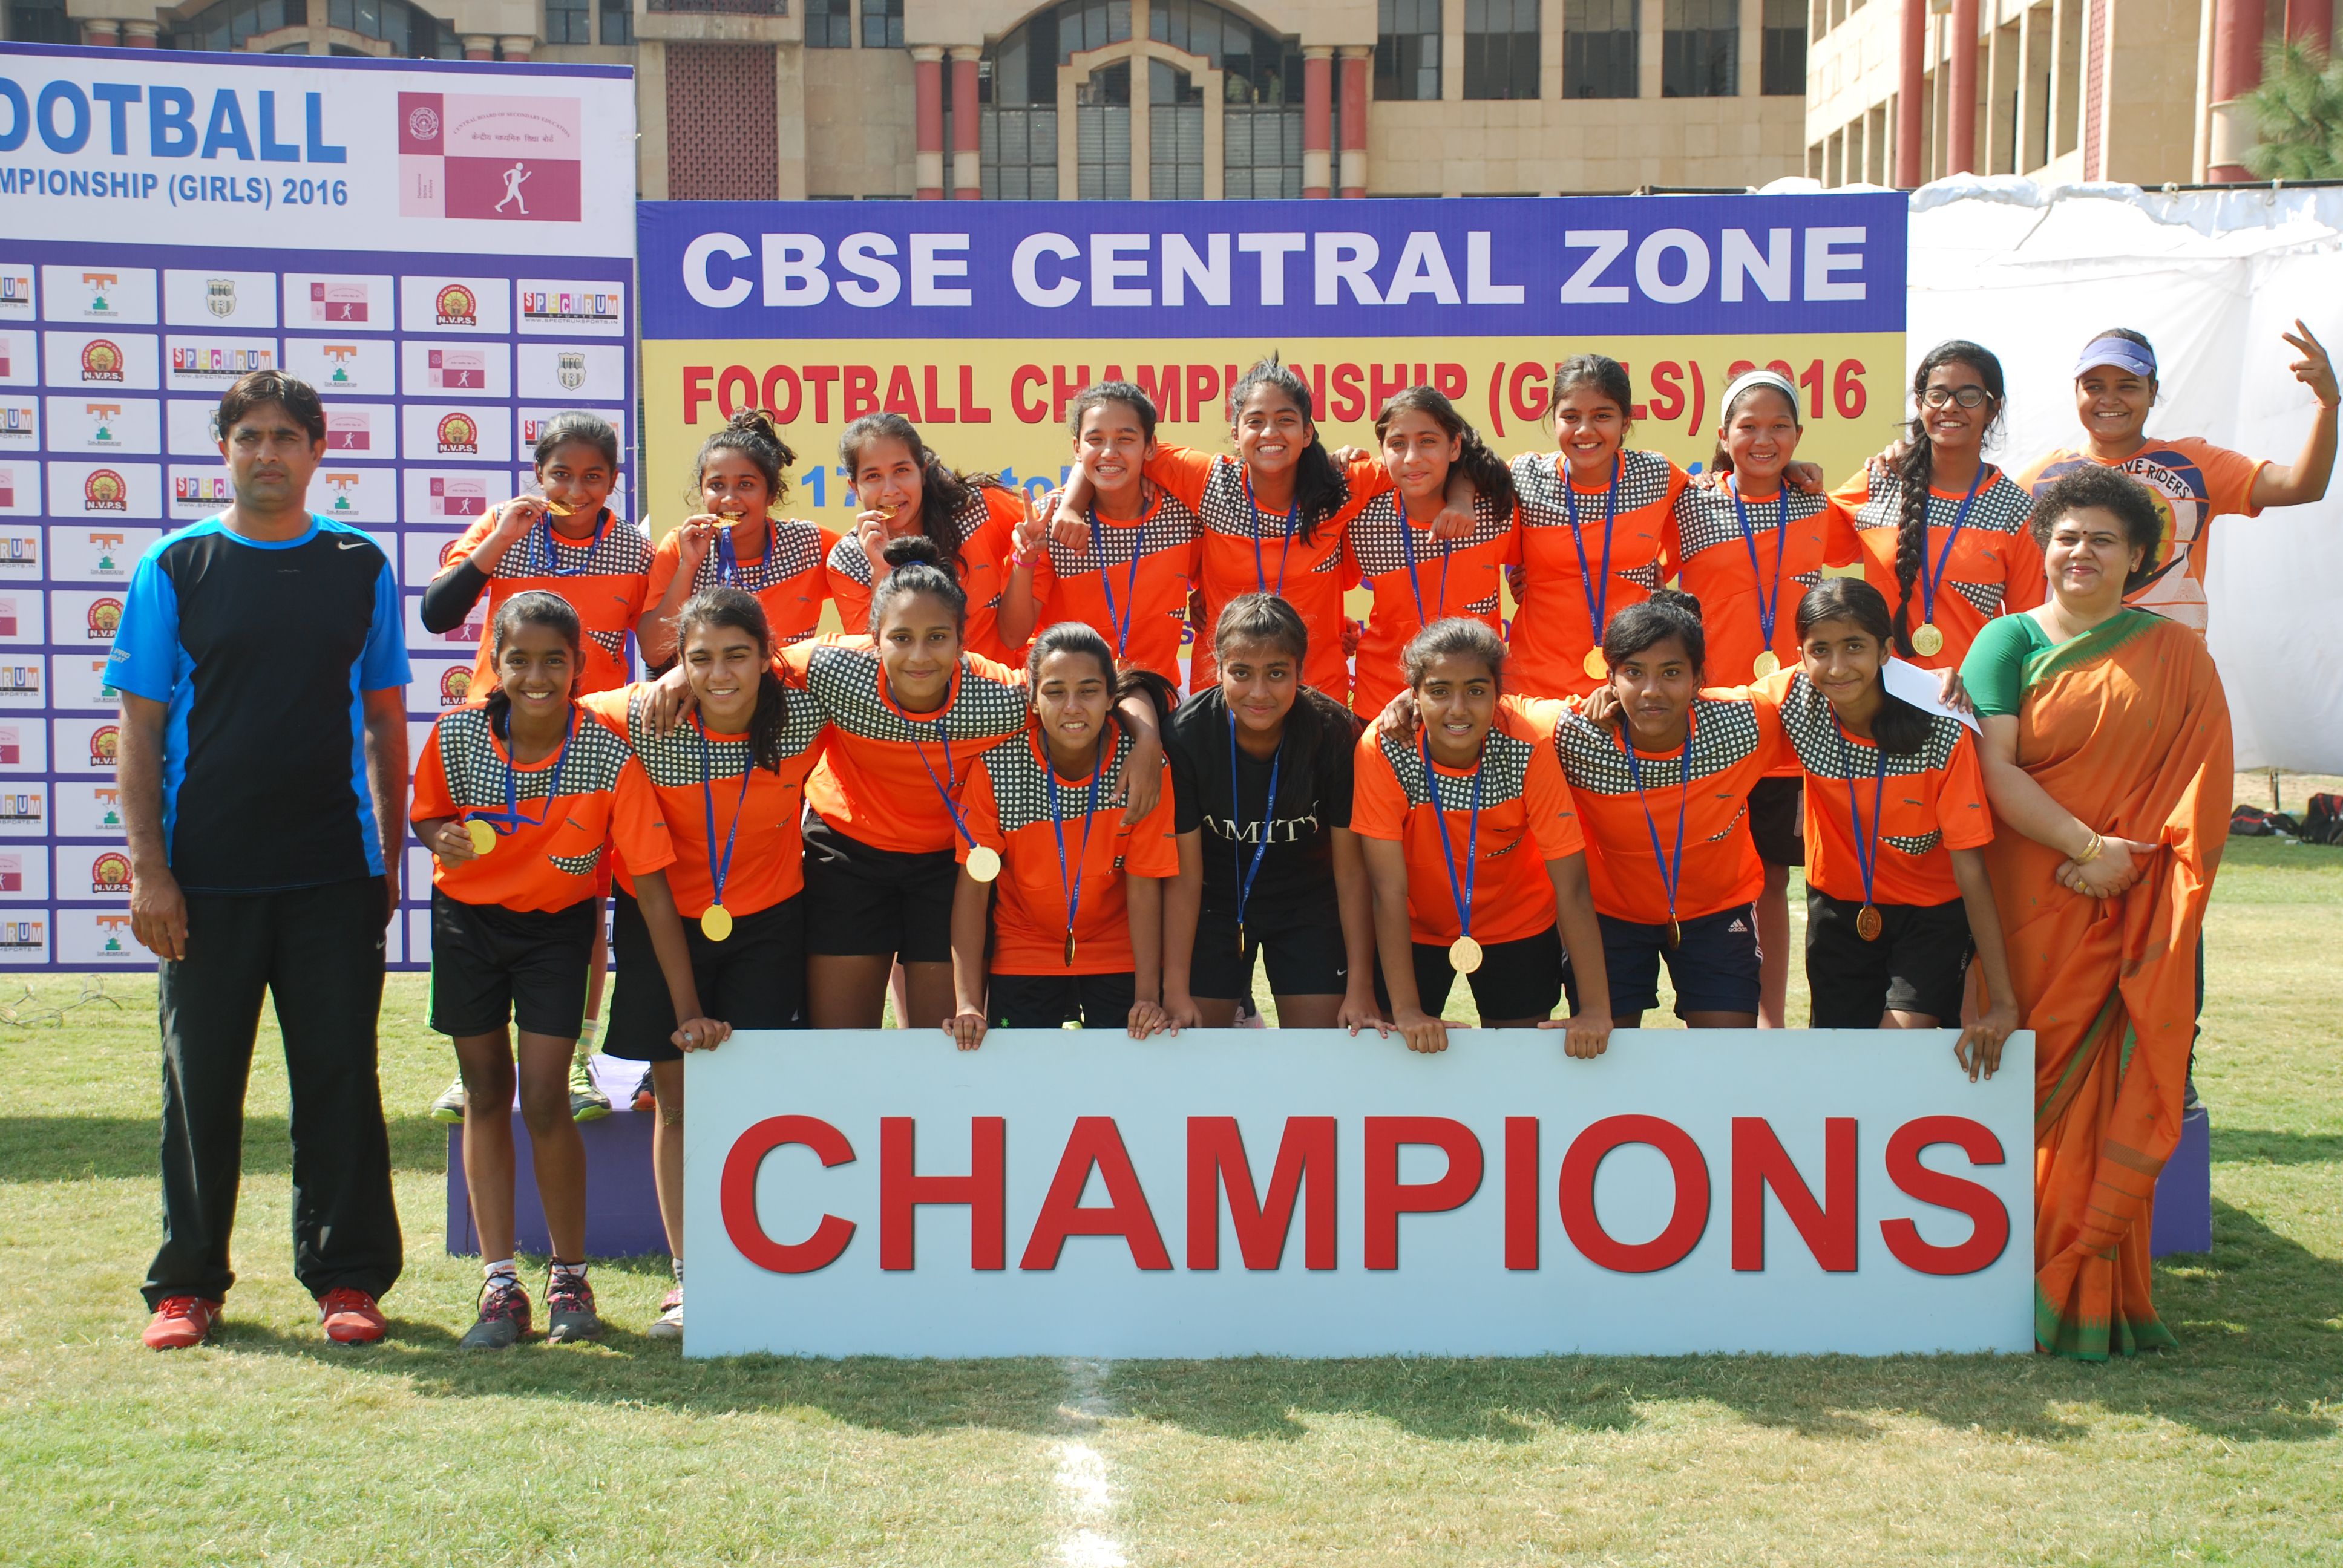 Winners of CBSE Central Zone Football Championship 2016- Ahlcon Public School, Mayur Vihar